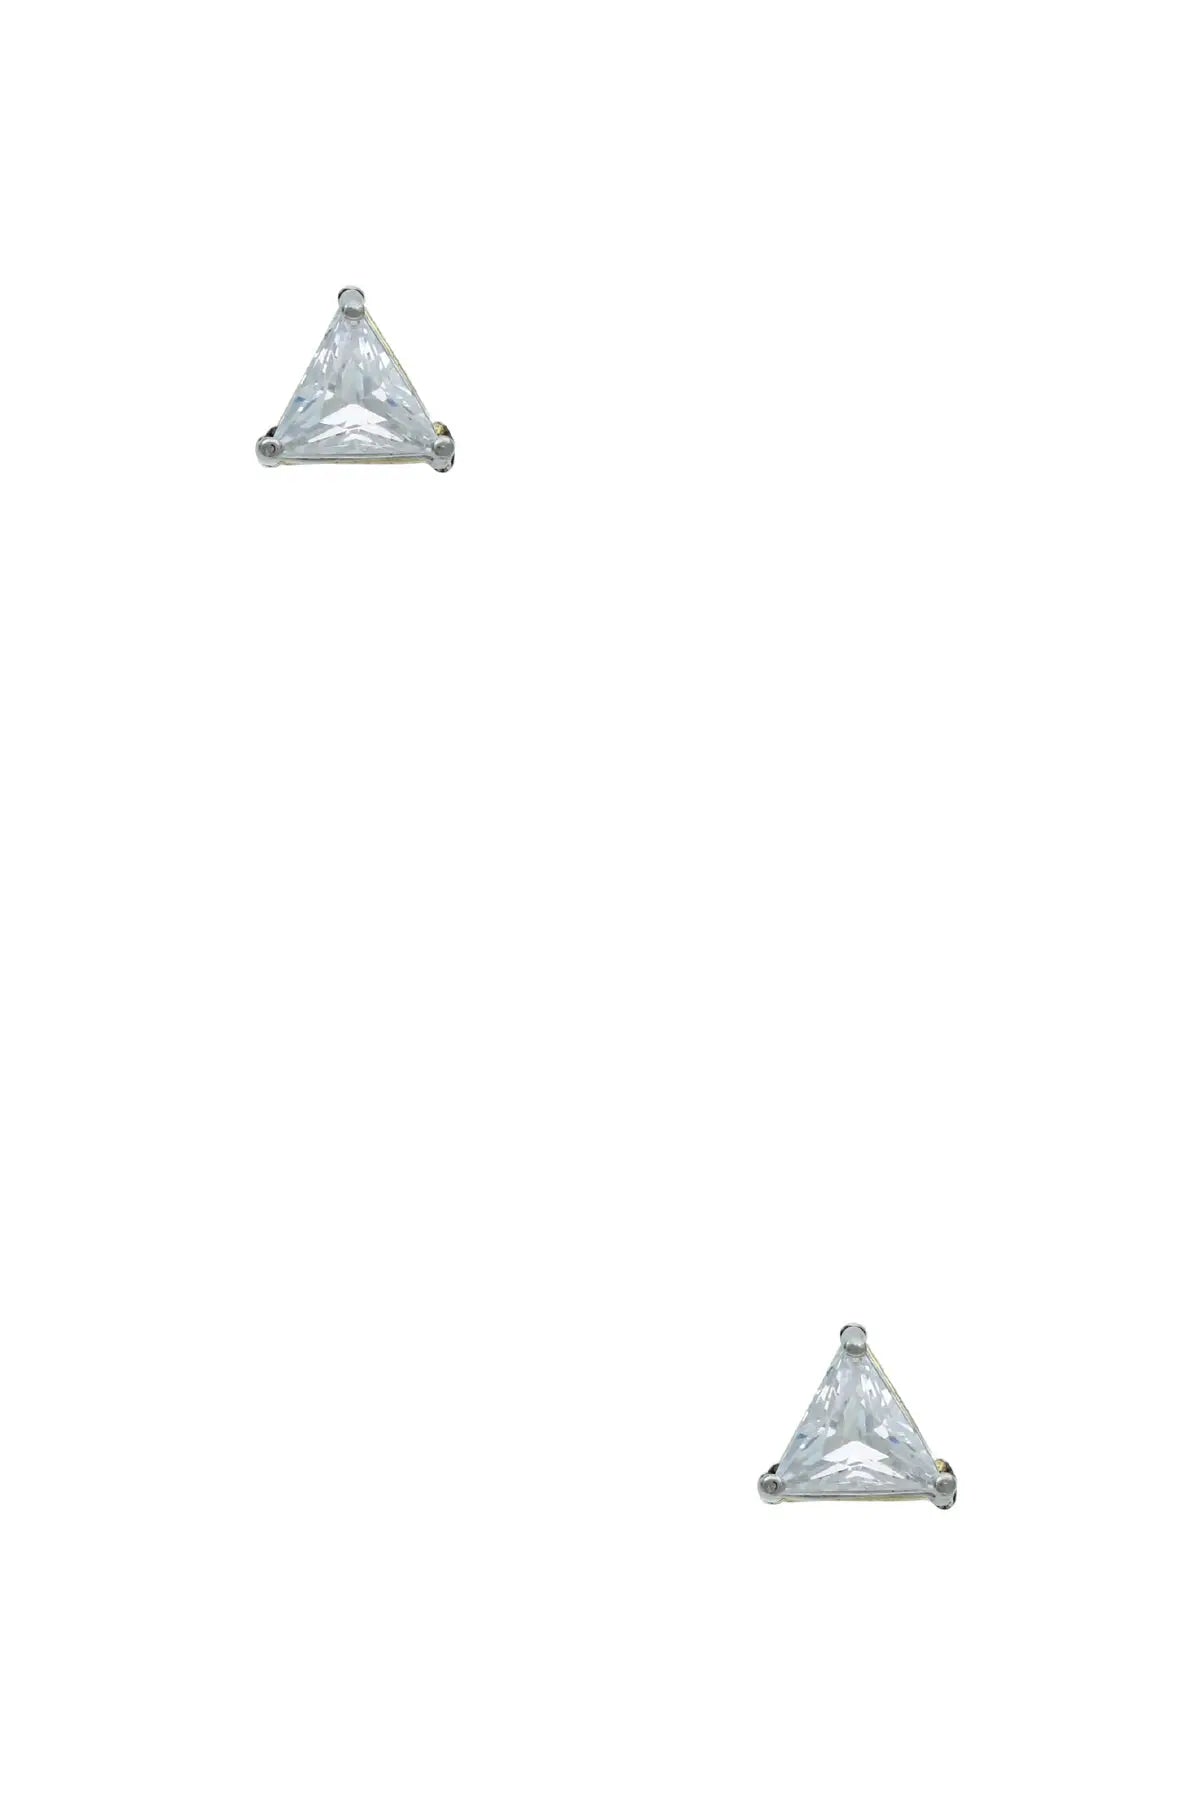 Triangle 7mm Crystal Stud Earring Sunny EvE Fashion